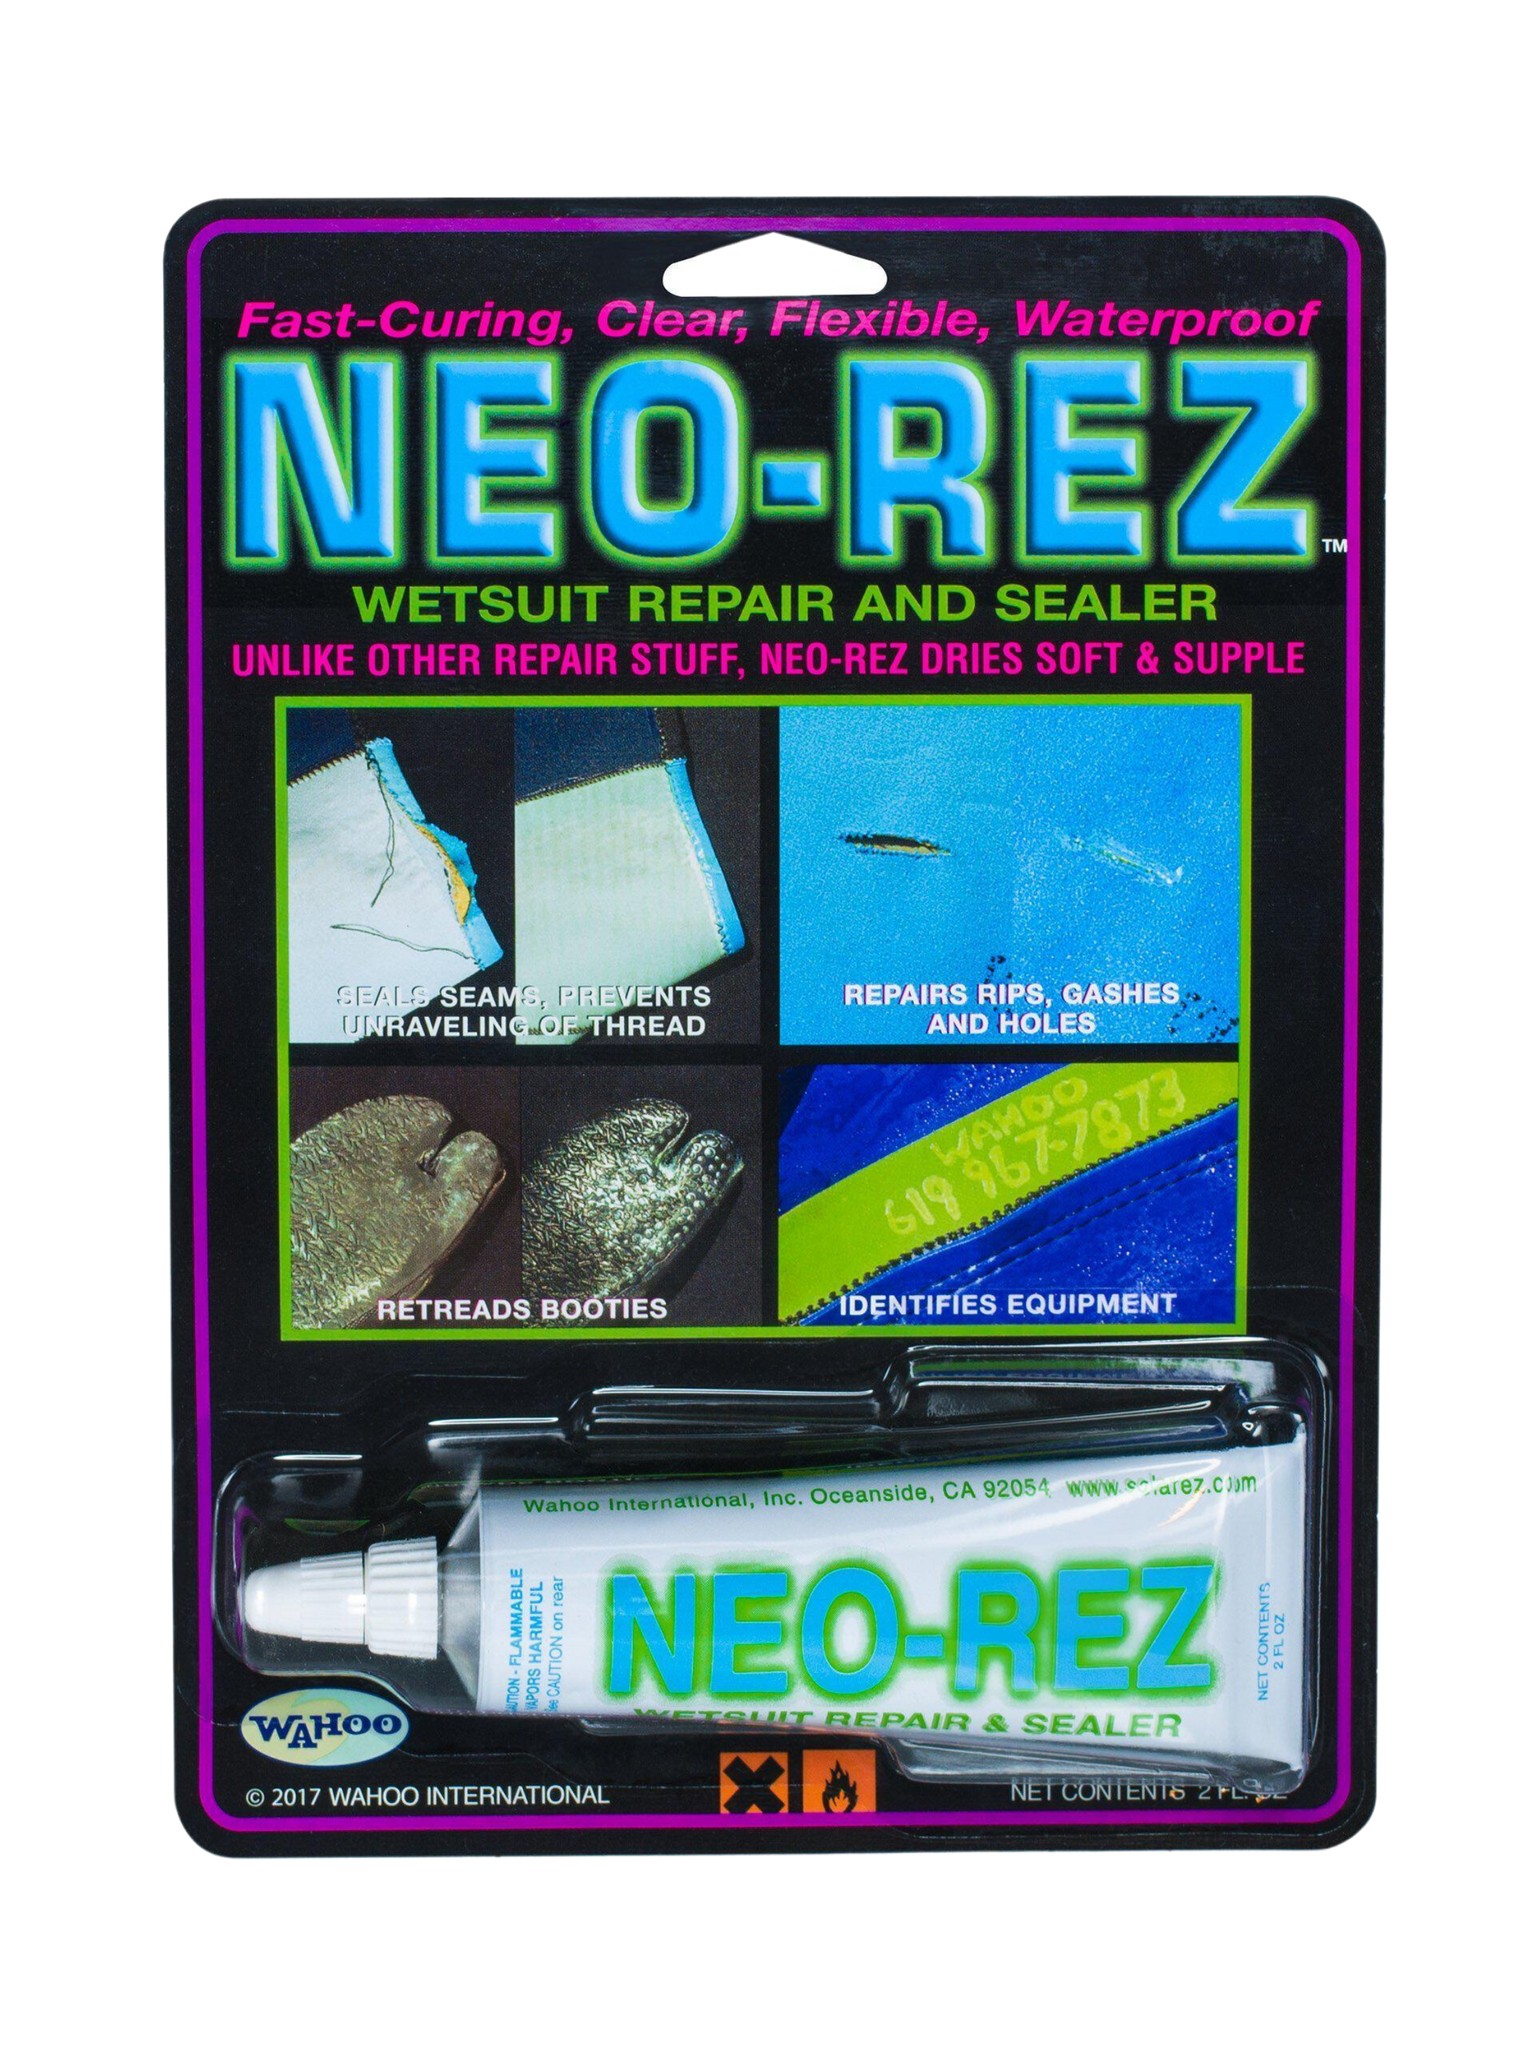 Solarez Neorez Wetsuit Repair